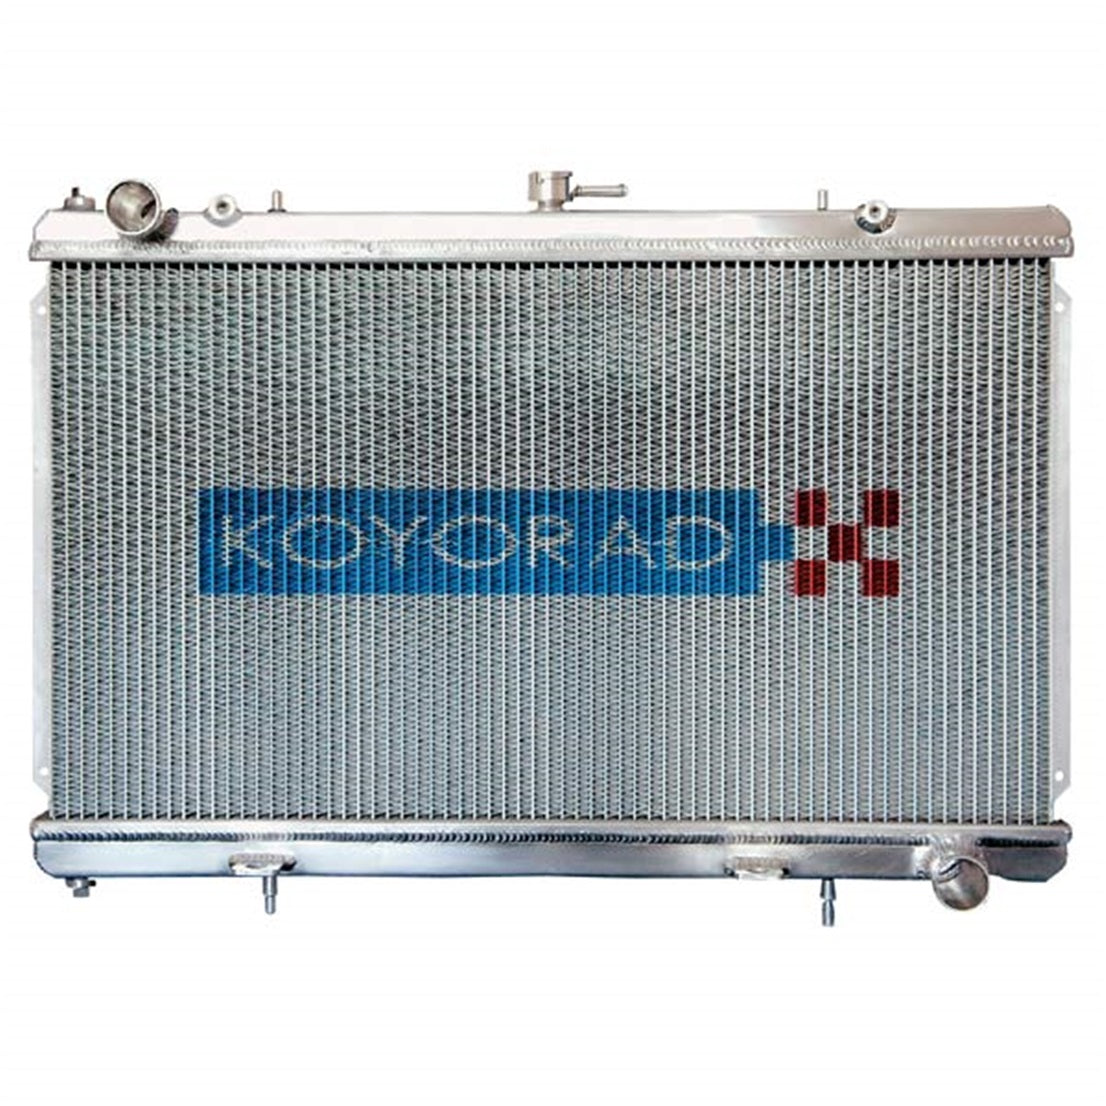 Koyorad Aluminum Radiator (36mm Core) - Mazda MX5 NB 1.8L 99-05 (B6-ZE-BP-ZE)